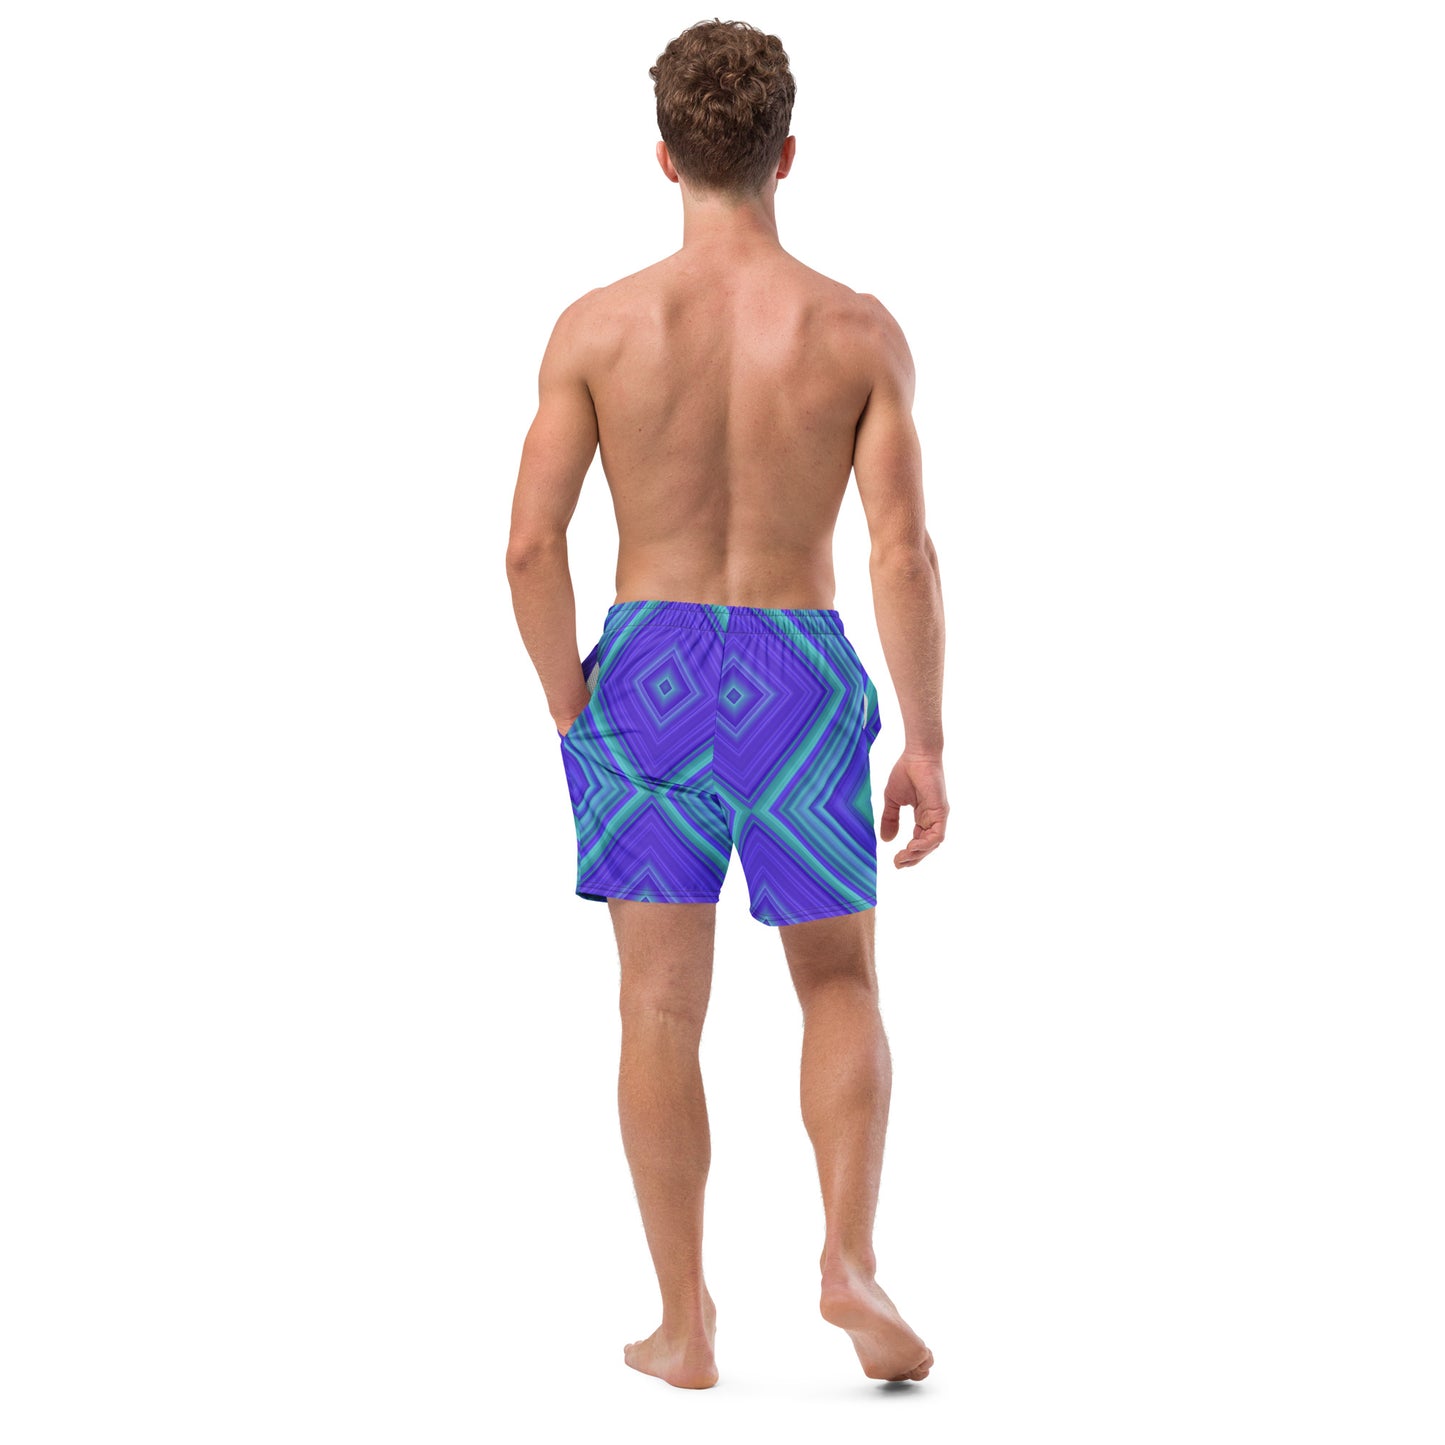 Men's swim trunks "Dawn Patrol"